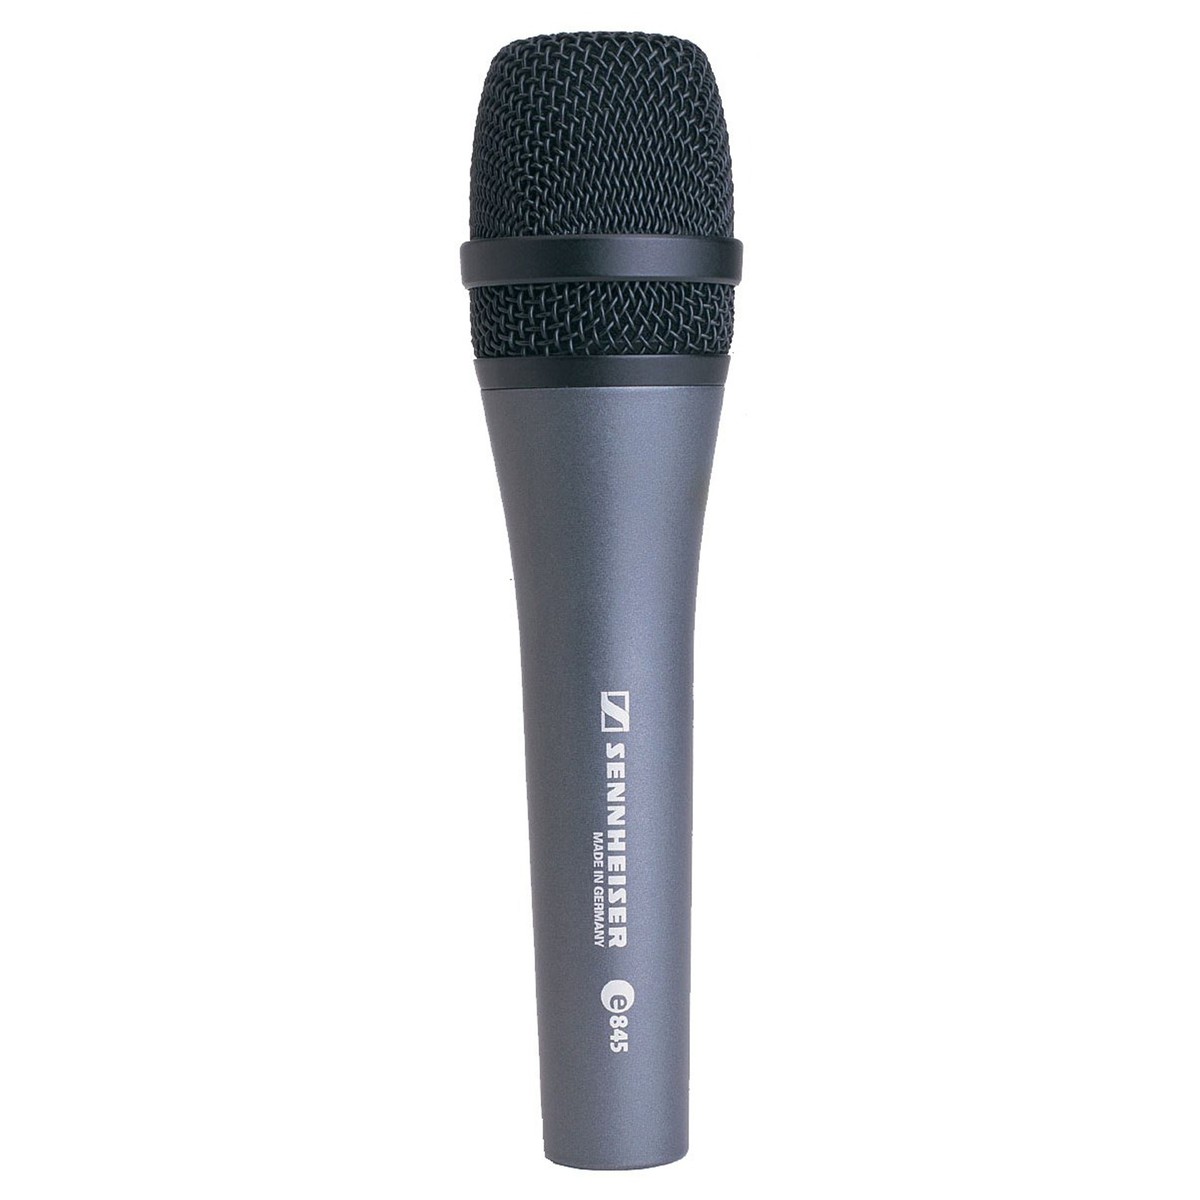 SENNHEISER E845 dynamisches Mikrofon